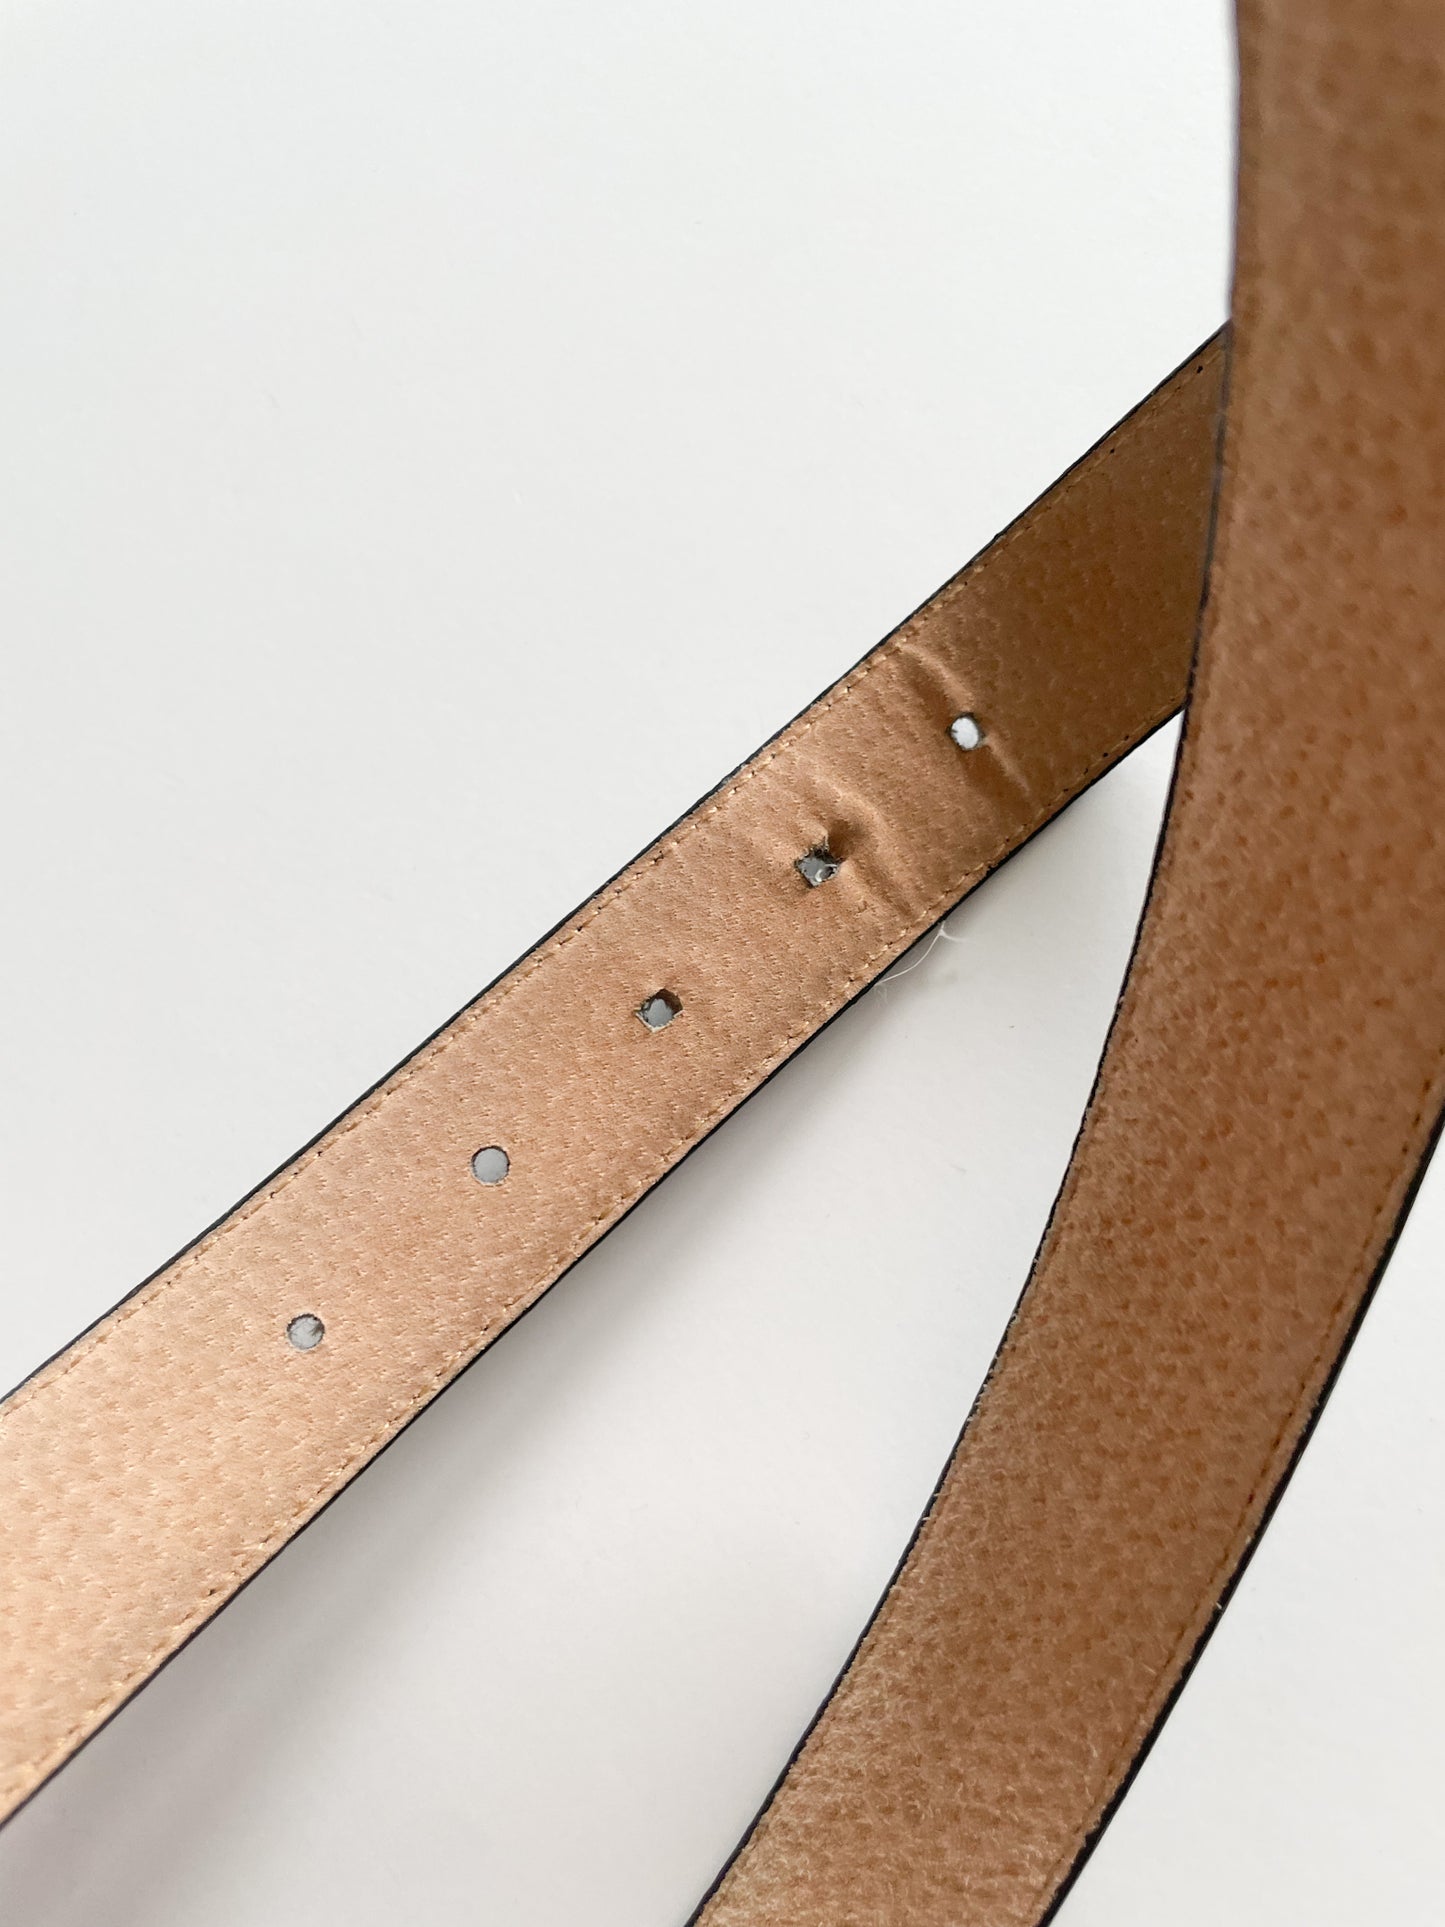 Perry Ellis Black Croco Genuine Leather Belt - Large (30"+)